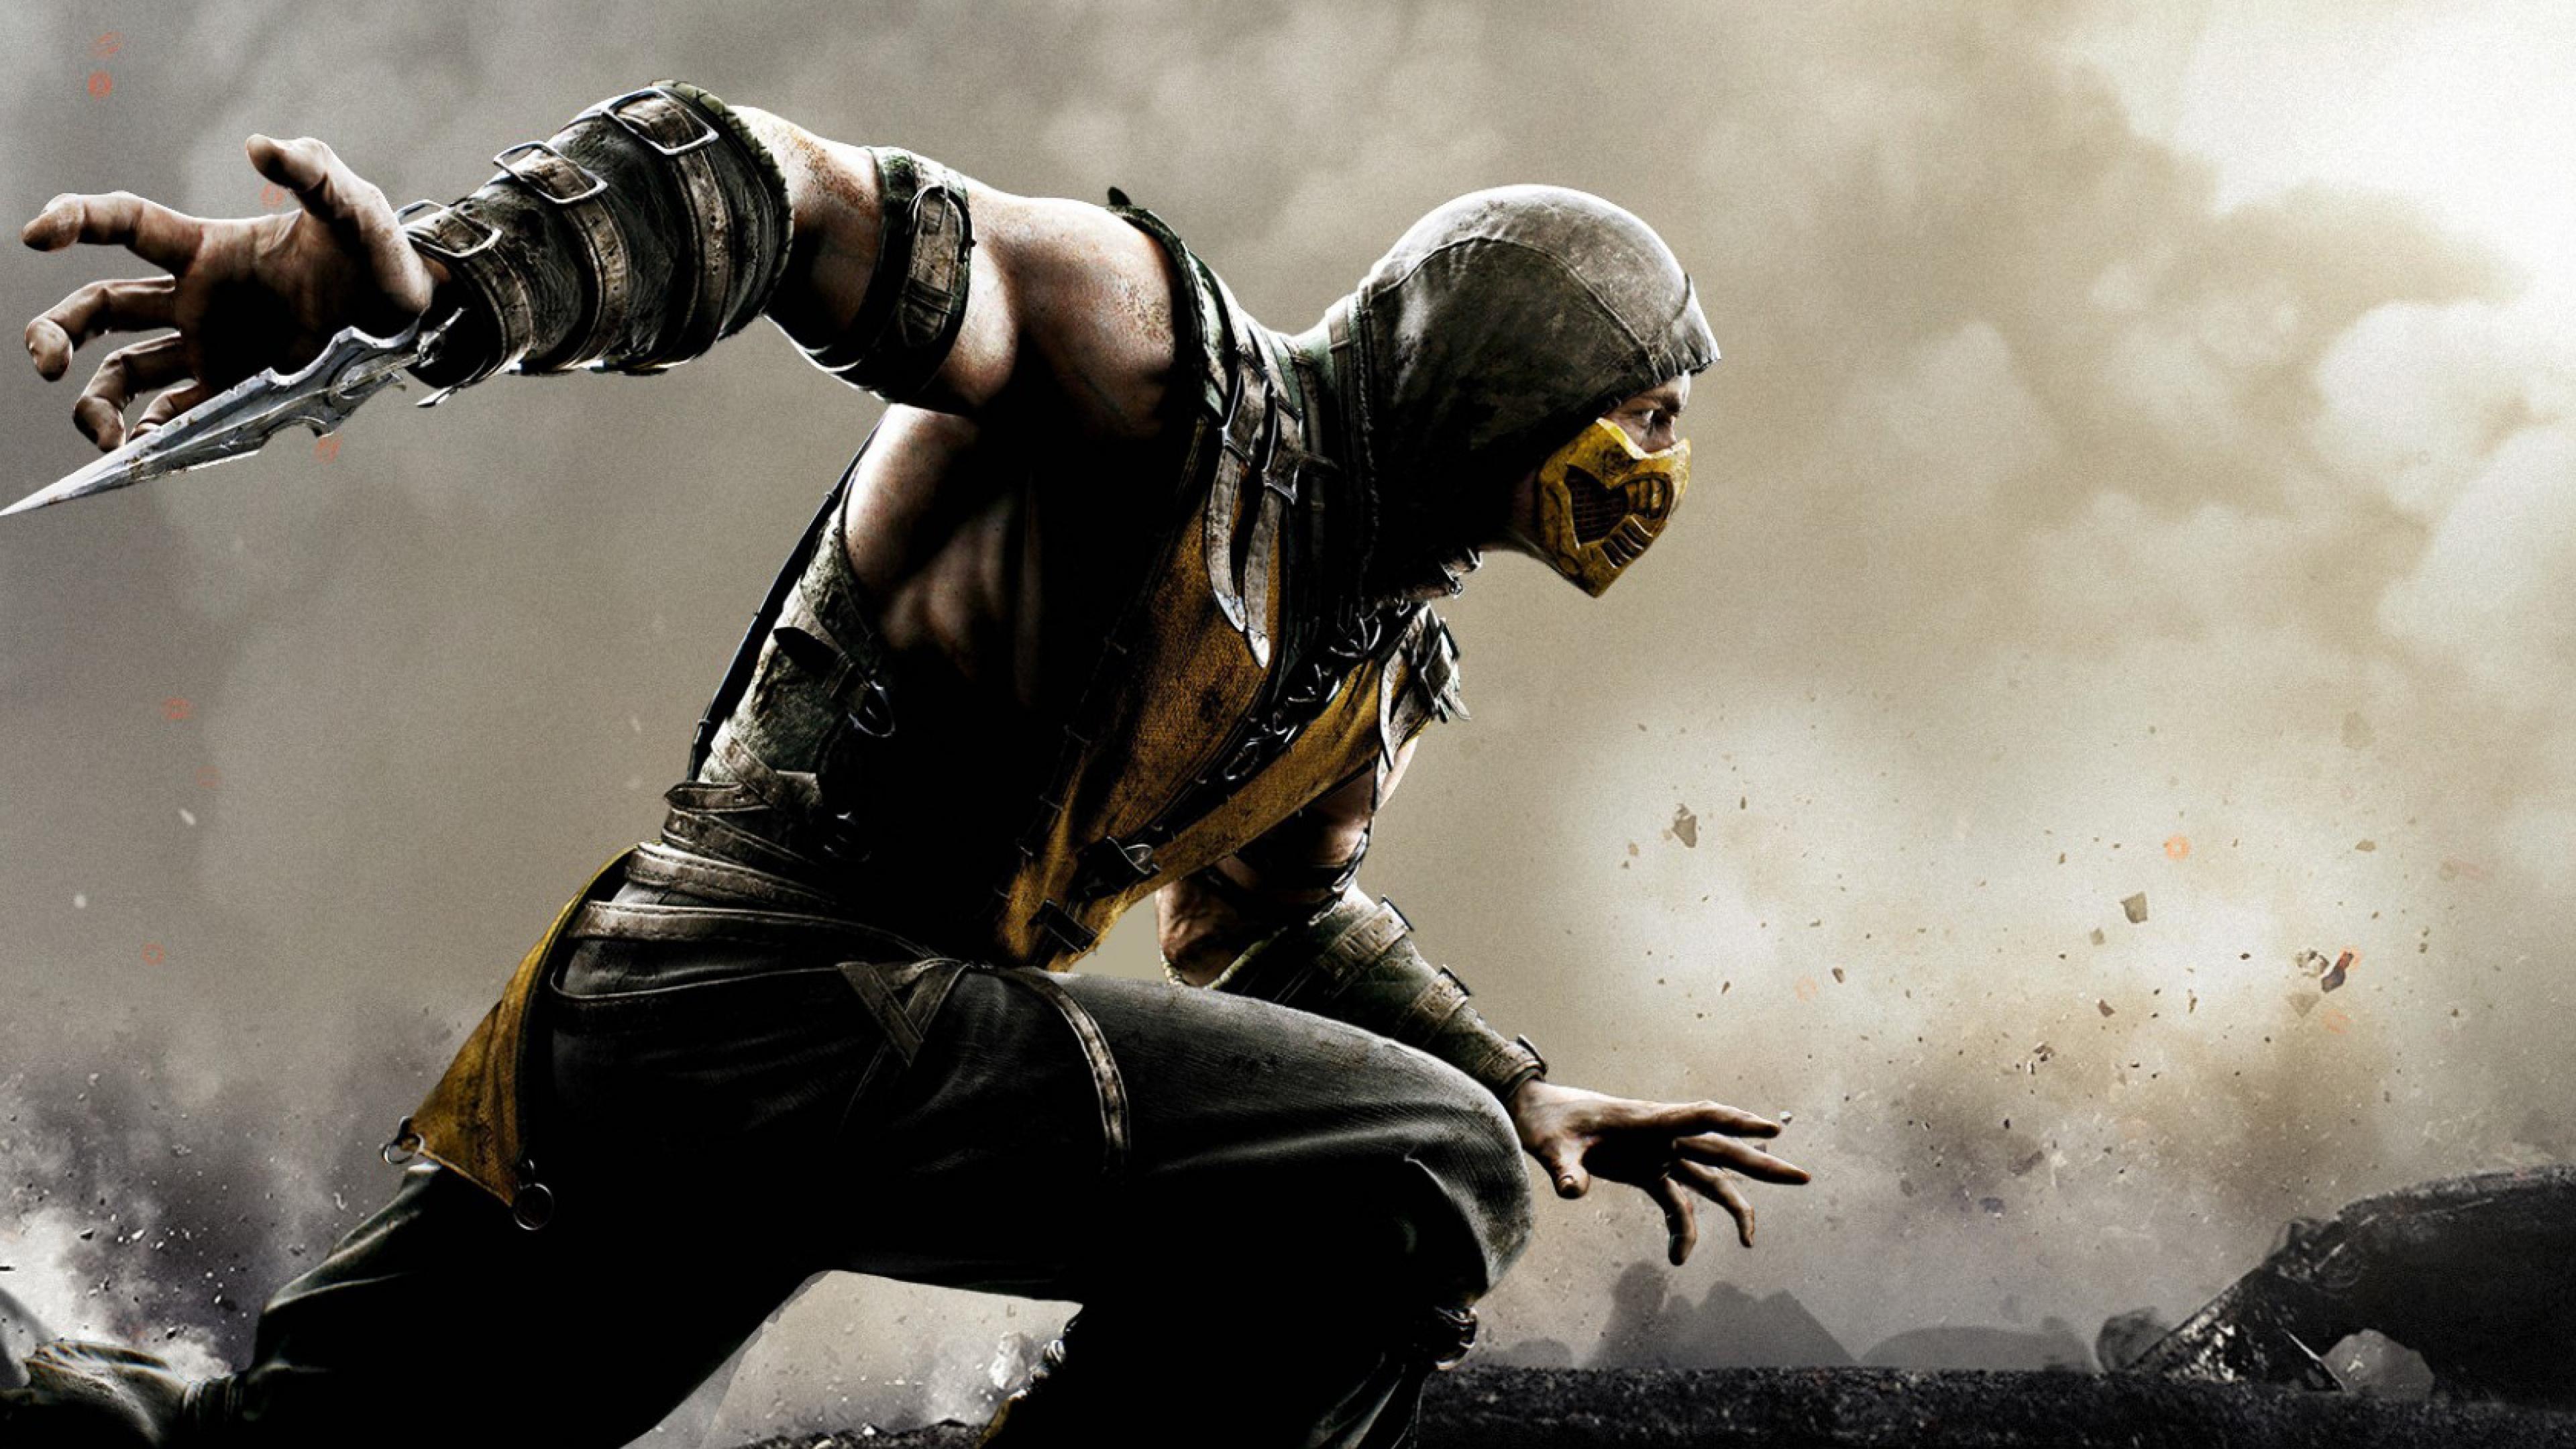 Free download HD Backgrounds Mortal Kombat X Scorpion Wallpapers